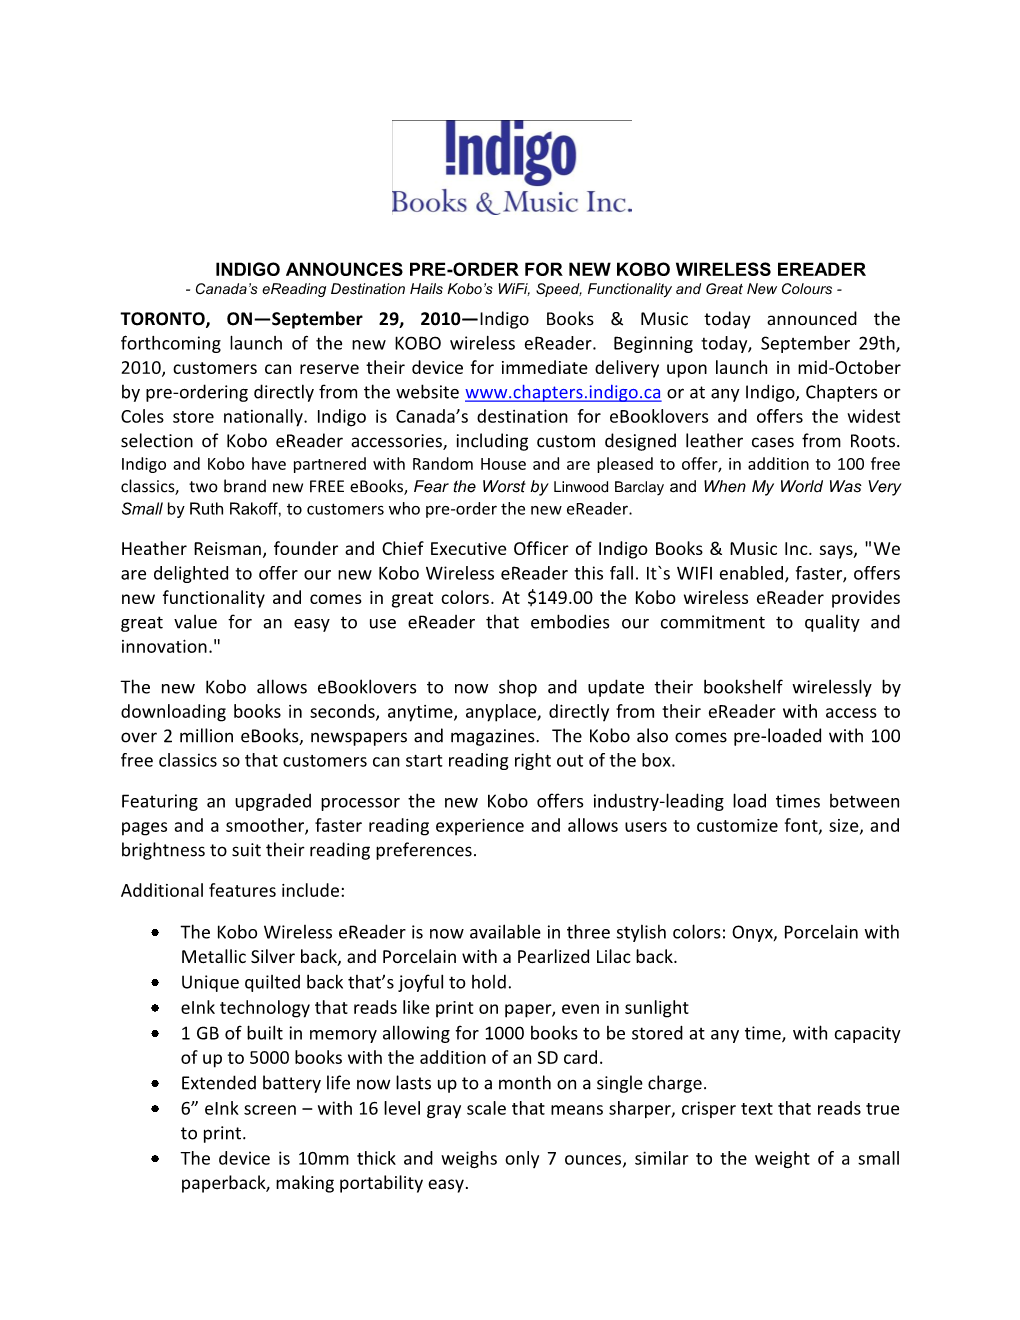 Indigo Announces Pre-Order for New Kobo Wireless Ereader